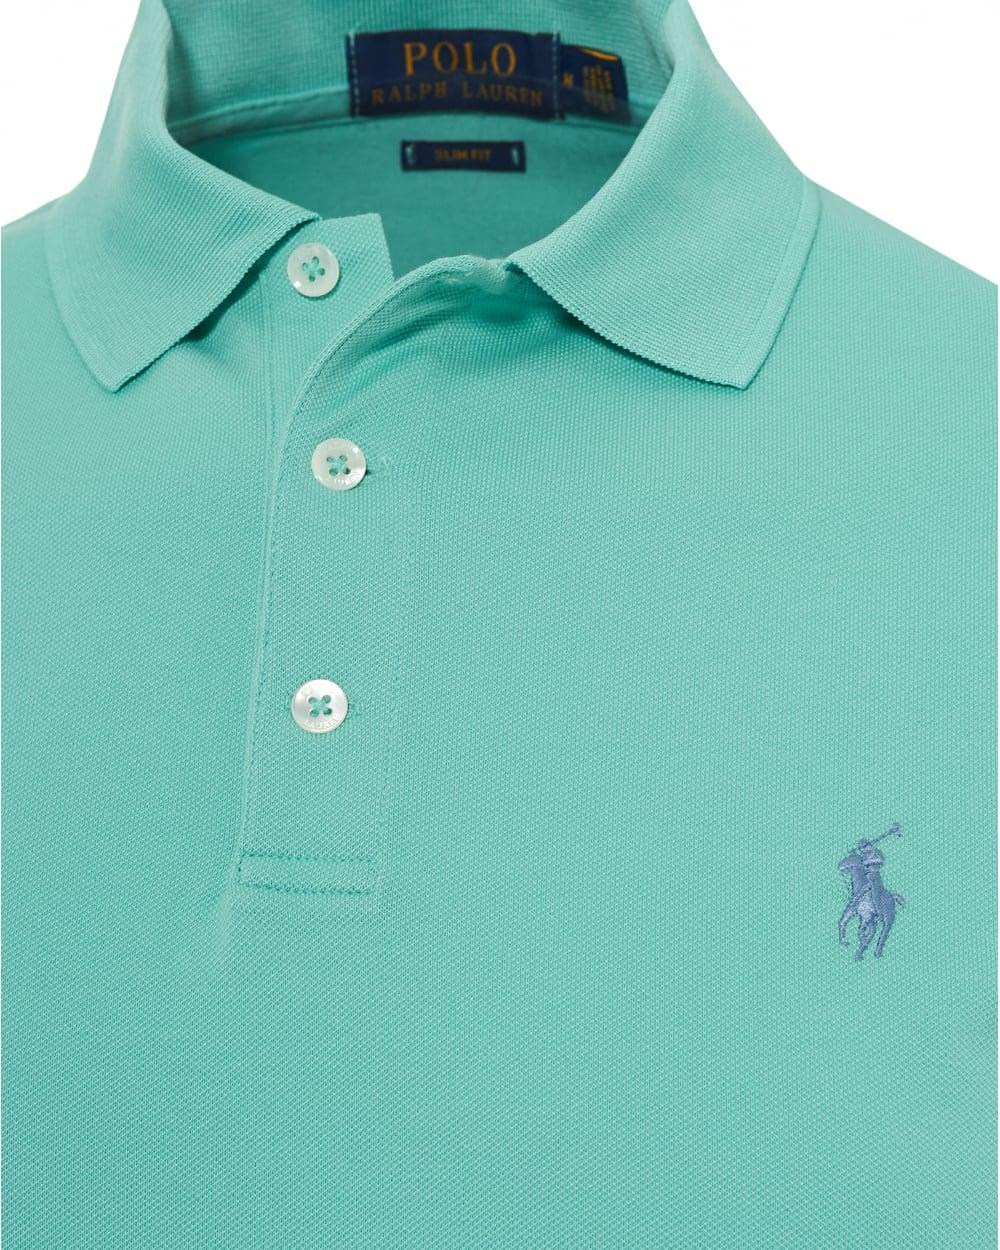 Green Polo Logo - Ralph Lauren Mens Mesh Polo Shirt, Embroidered Logo Mint Green Polo